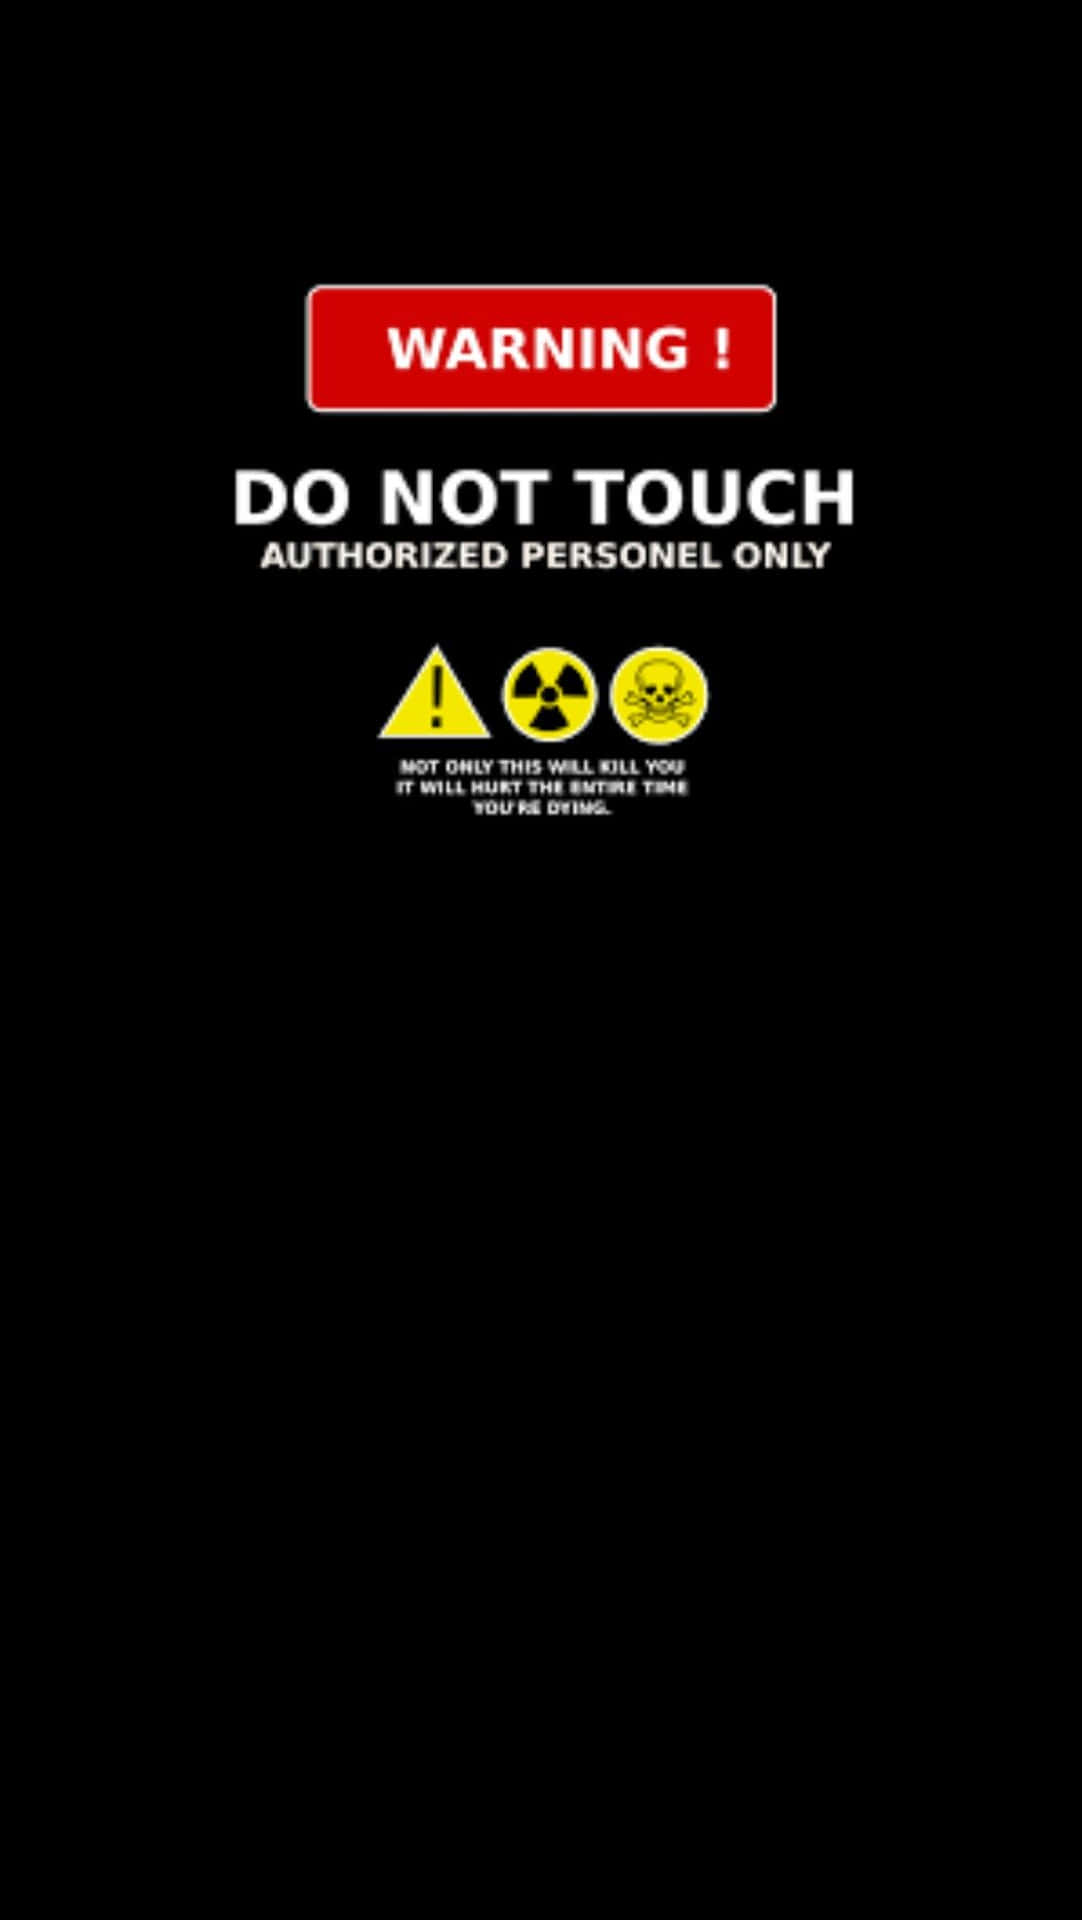 Do Not Touch Warning Wallpaper